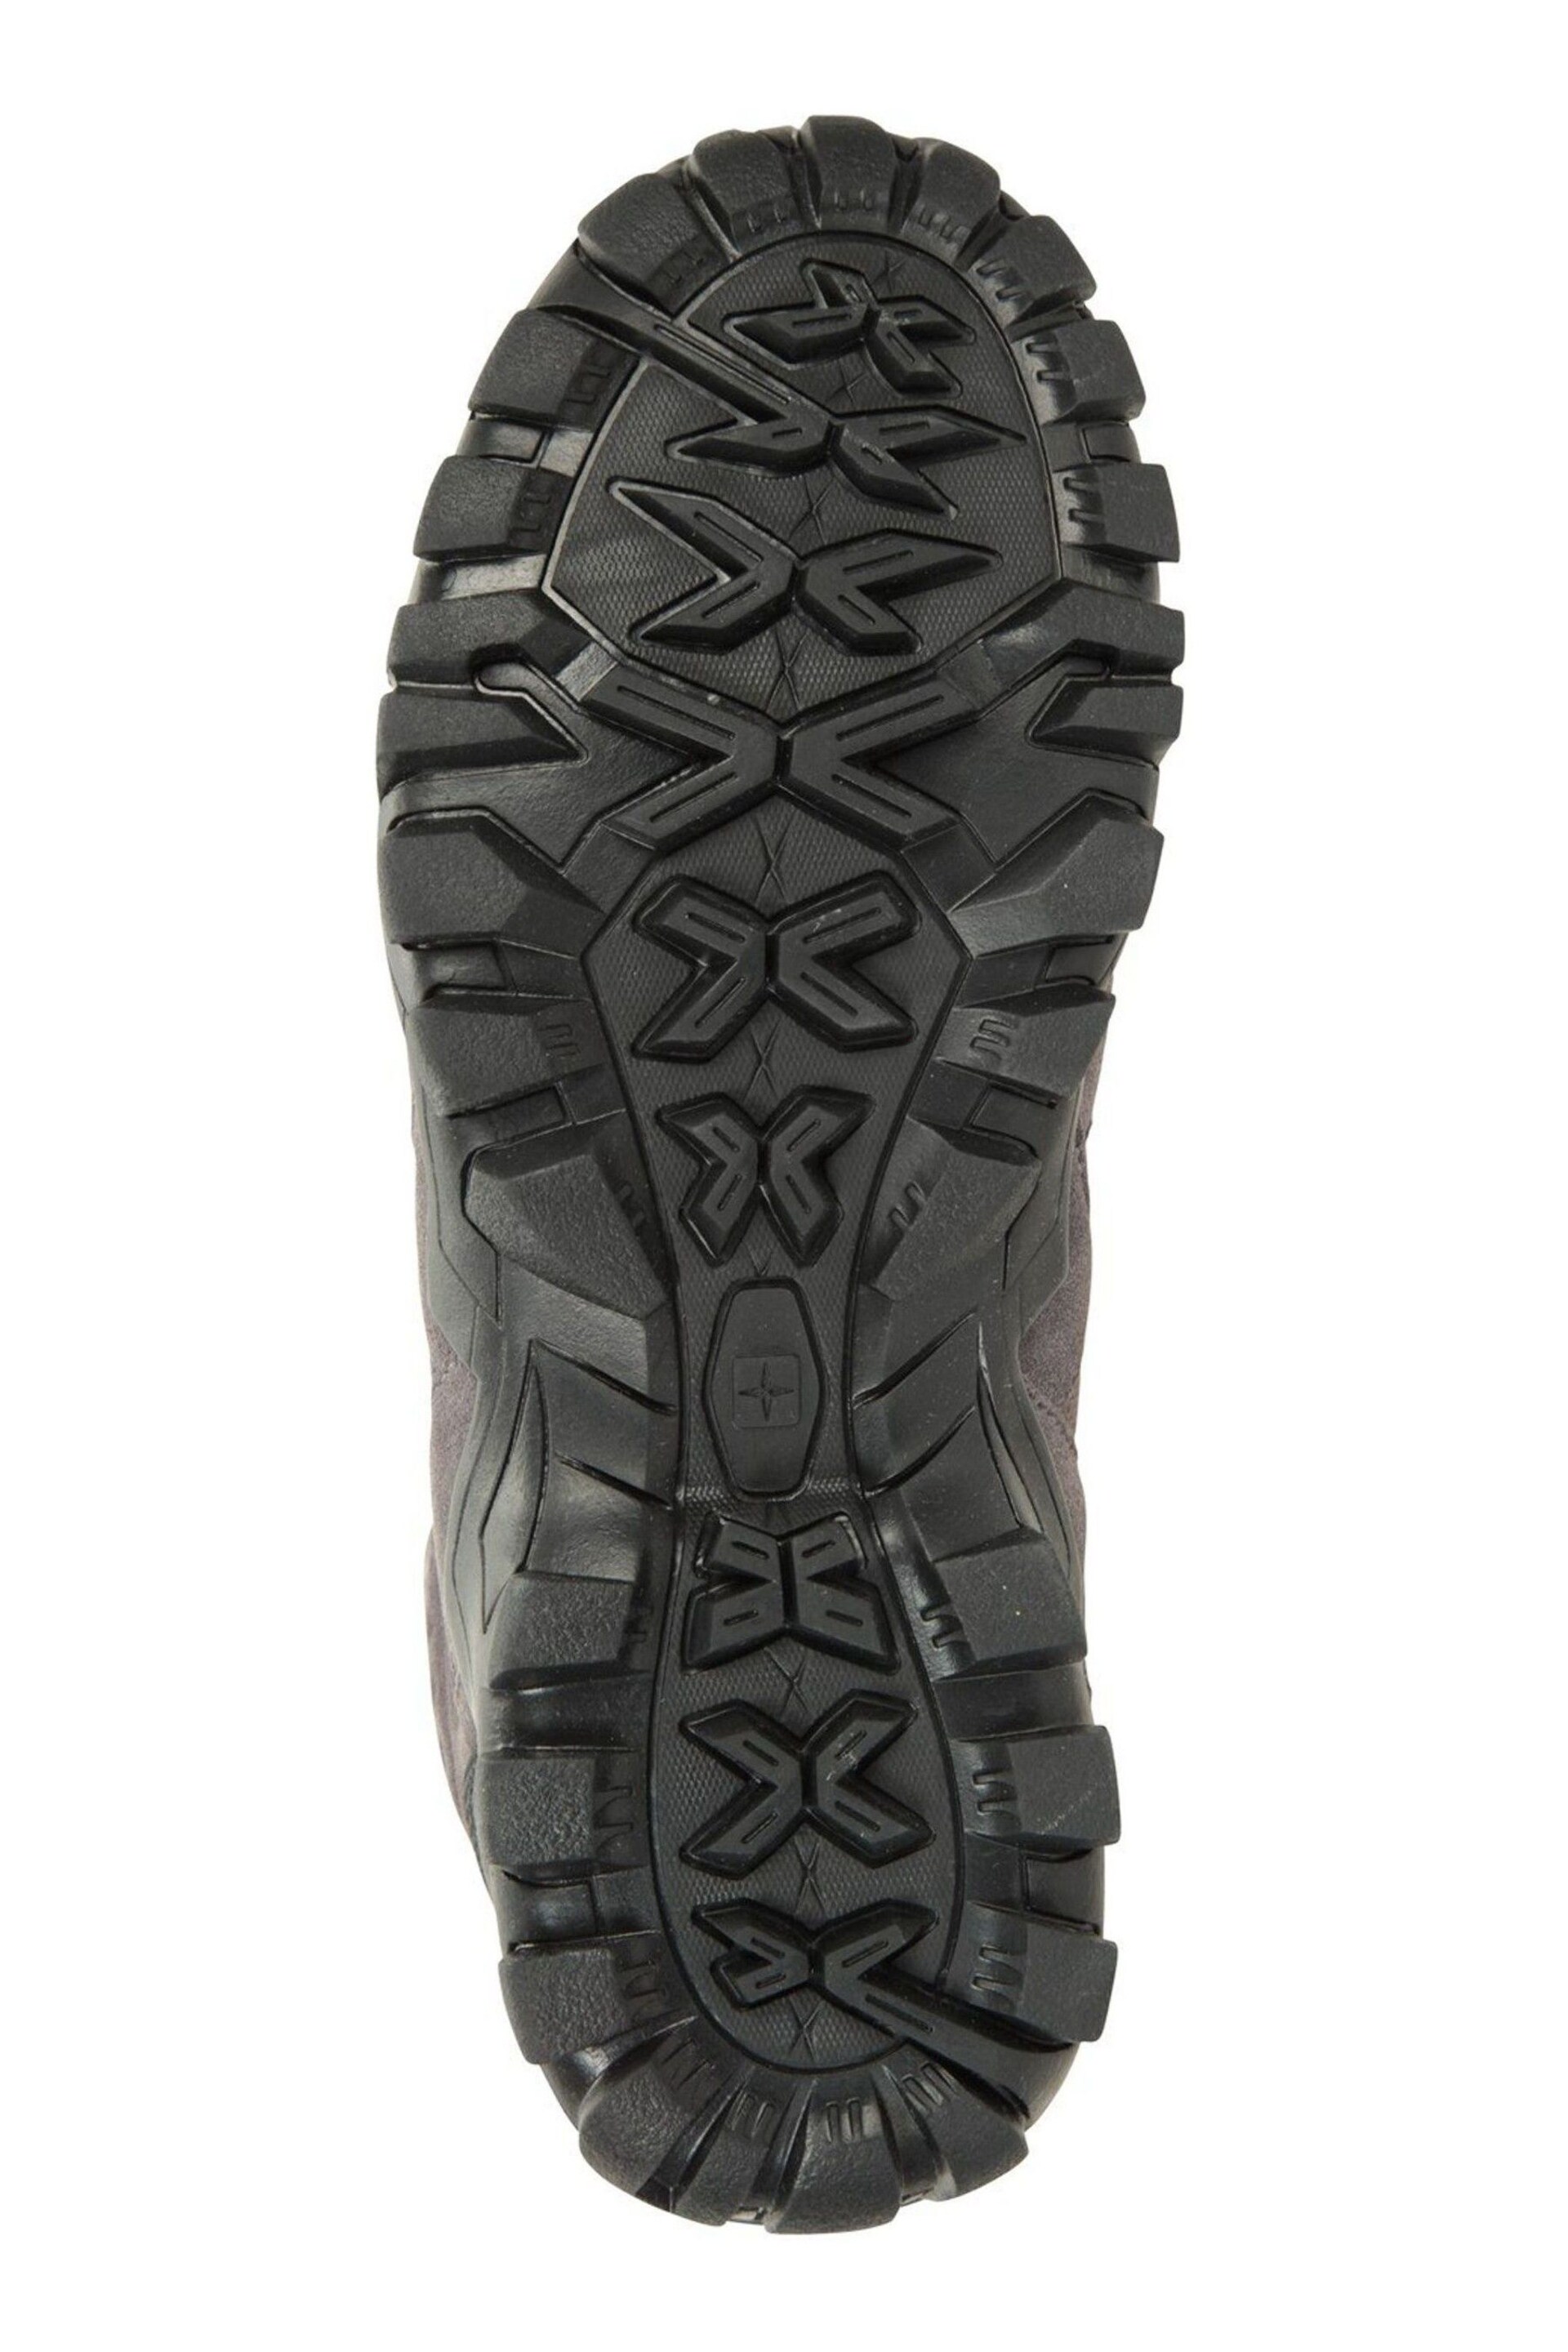 Mountain Warehouse Grey Belfour Womens Waterproof, Lightweight Walking Boots - Image 3 of 4